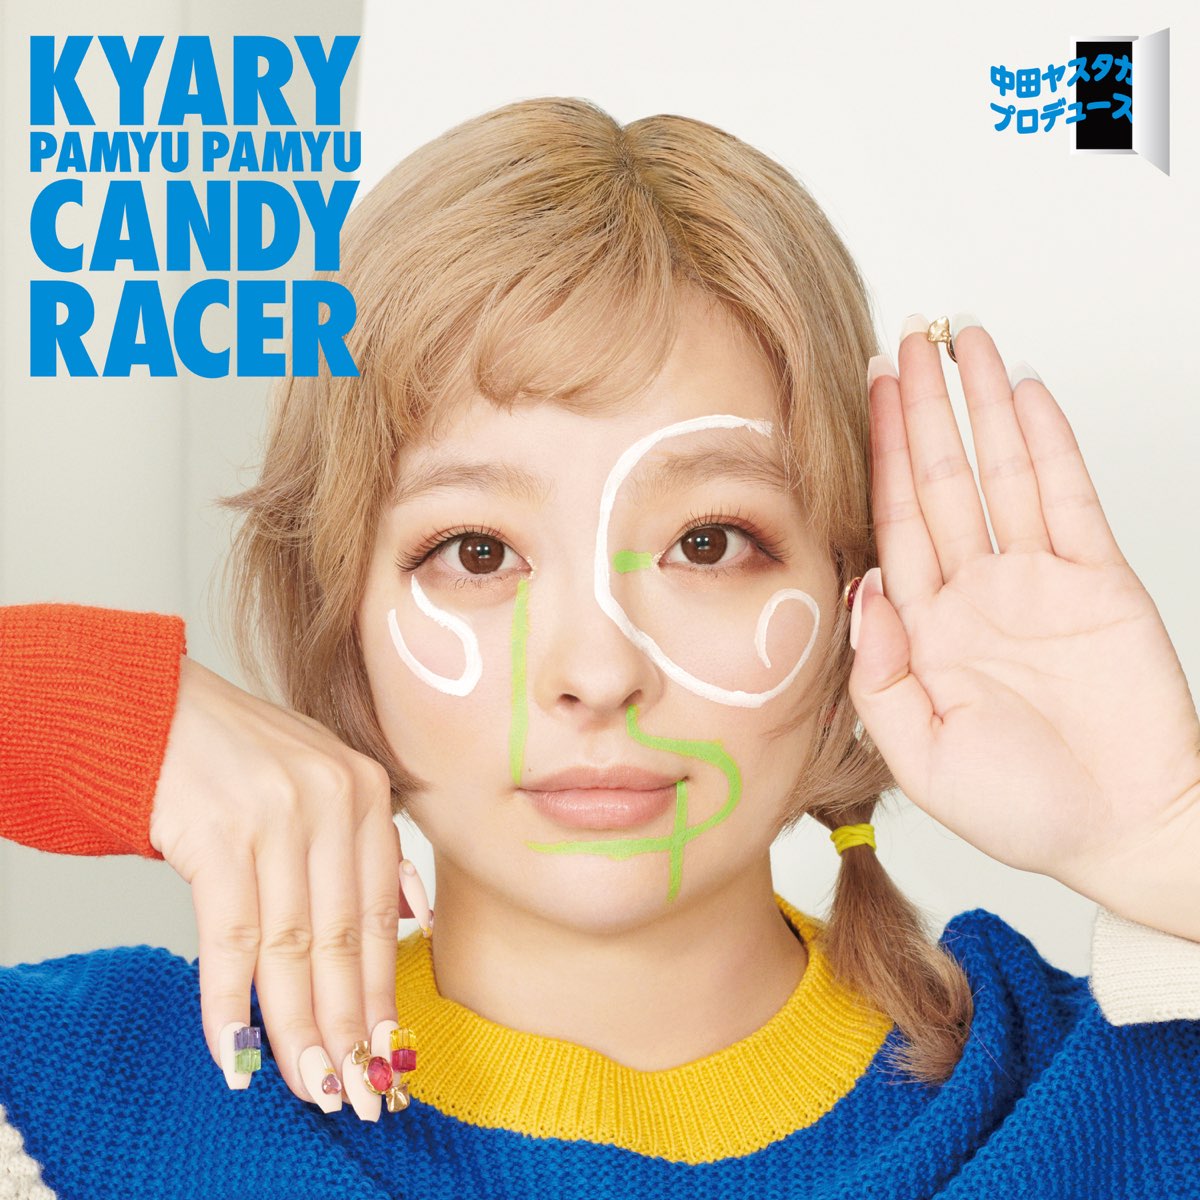 Kyary Pamyu Pamyu Candy Racer cover artwork